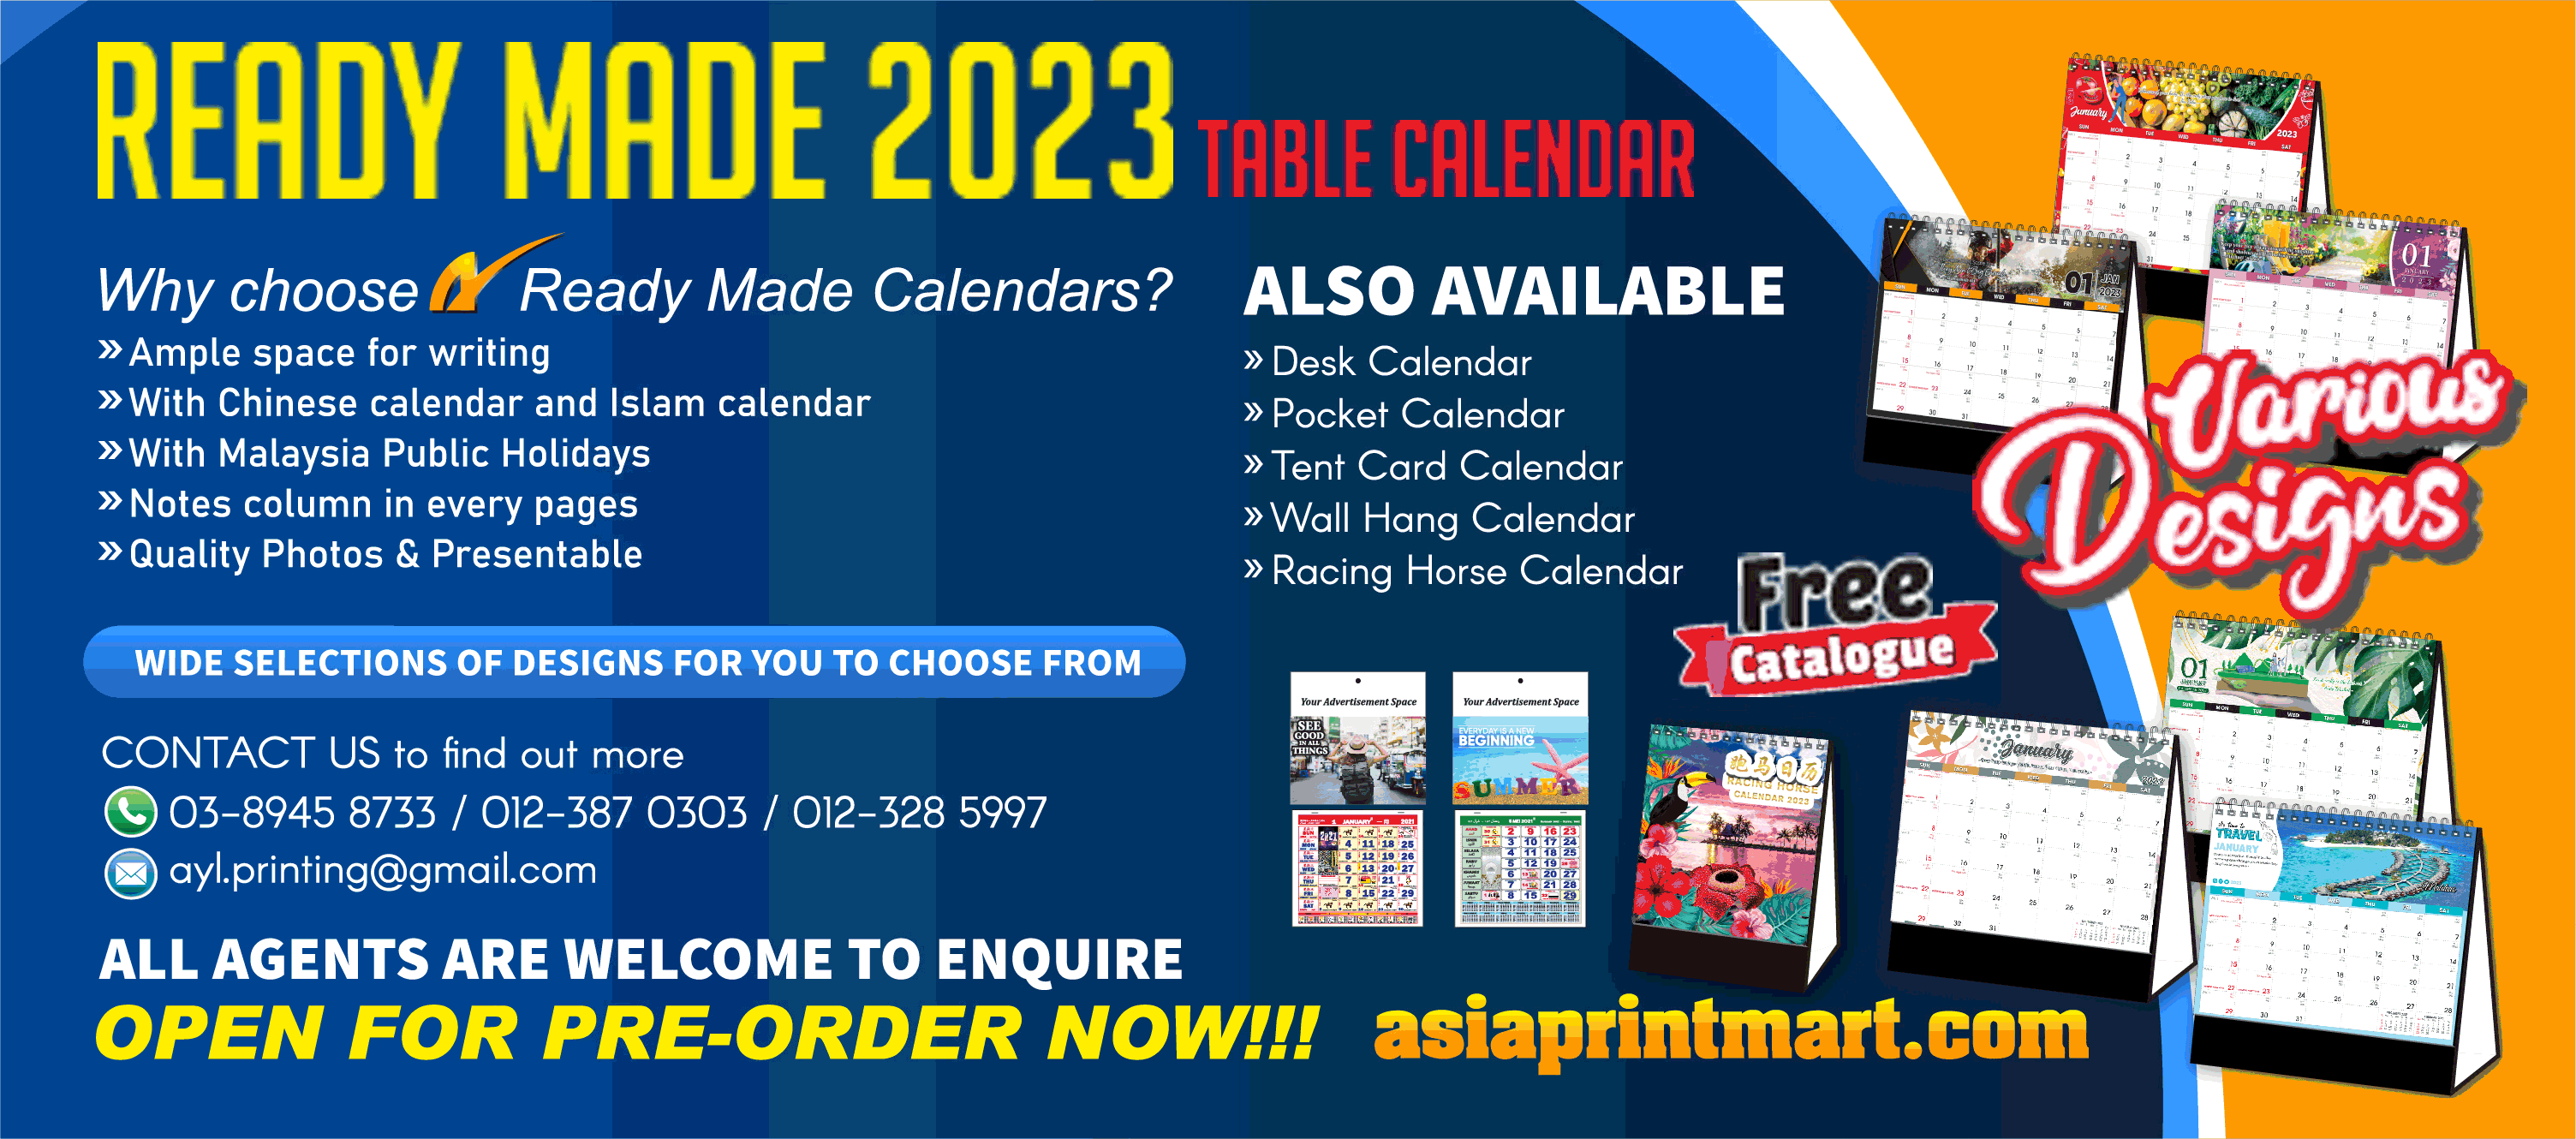 Custom Made Table Calendars 2023 | Print 2023 Desk Calendars | Print 2023 Ready Made Table Calendars | Cetak Kalendar Meja 2023 | Calendars Company Malaysia